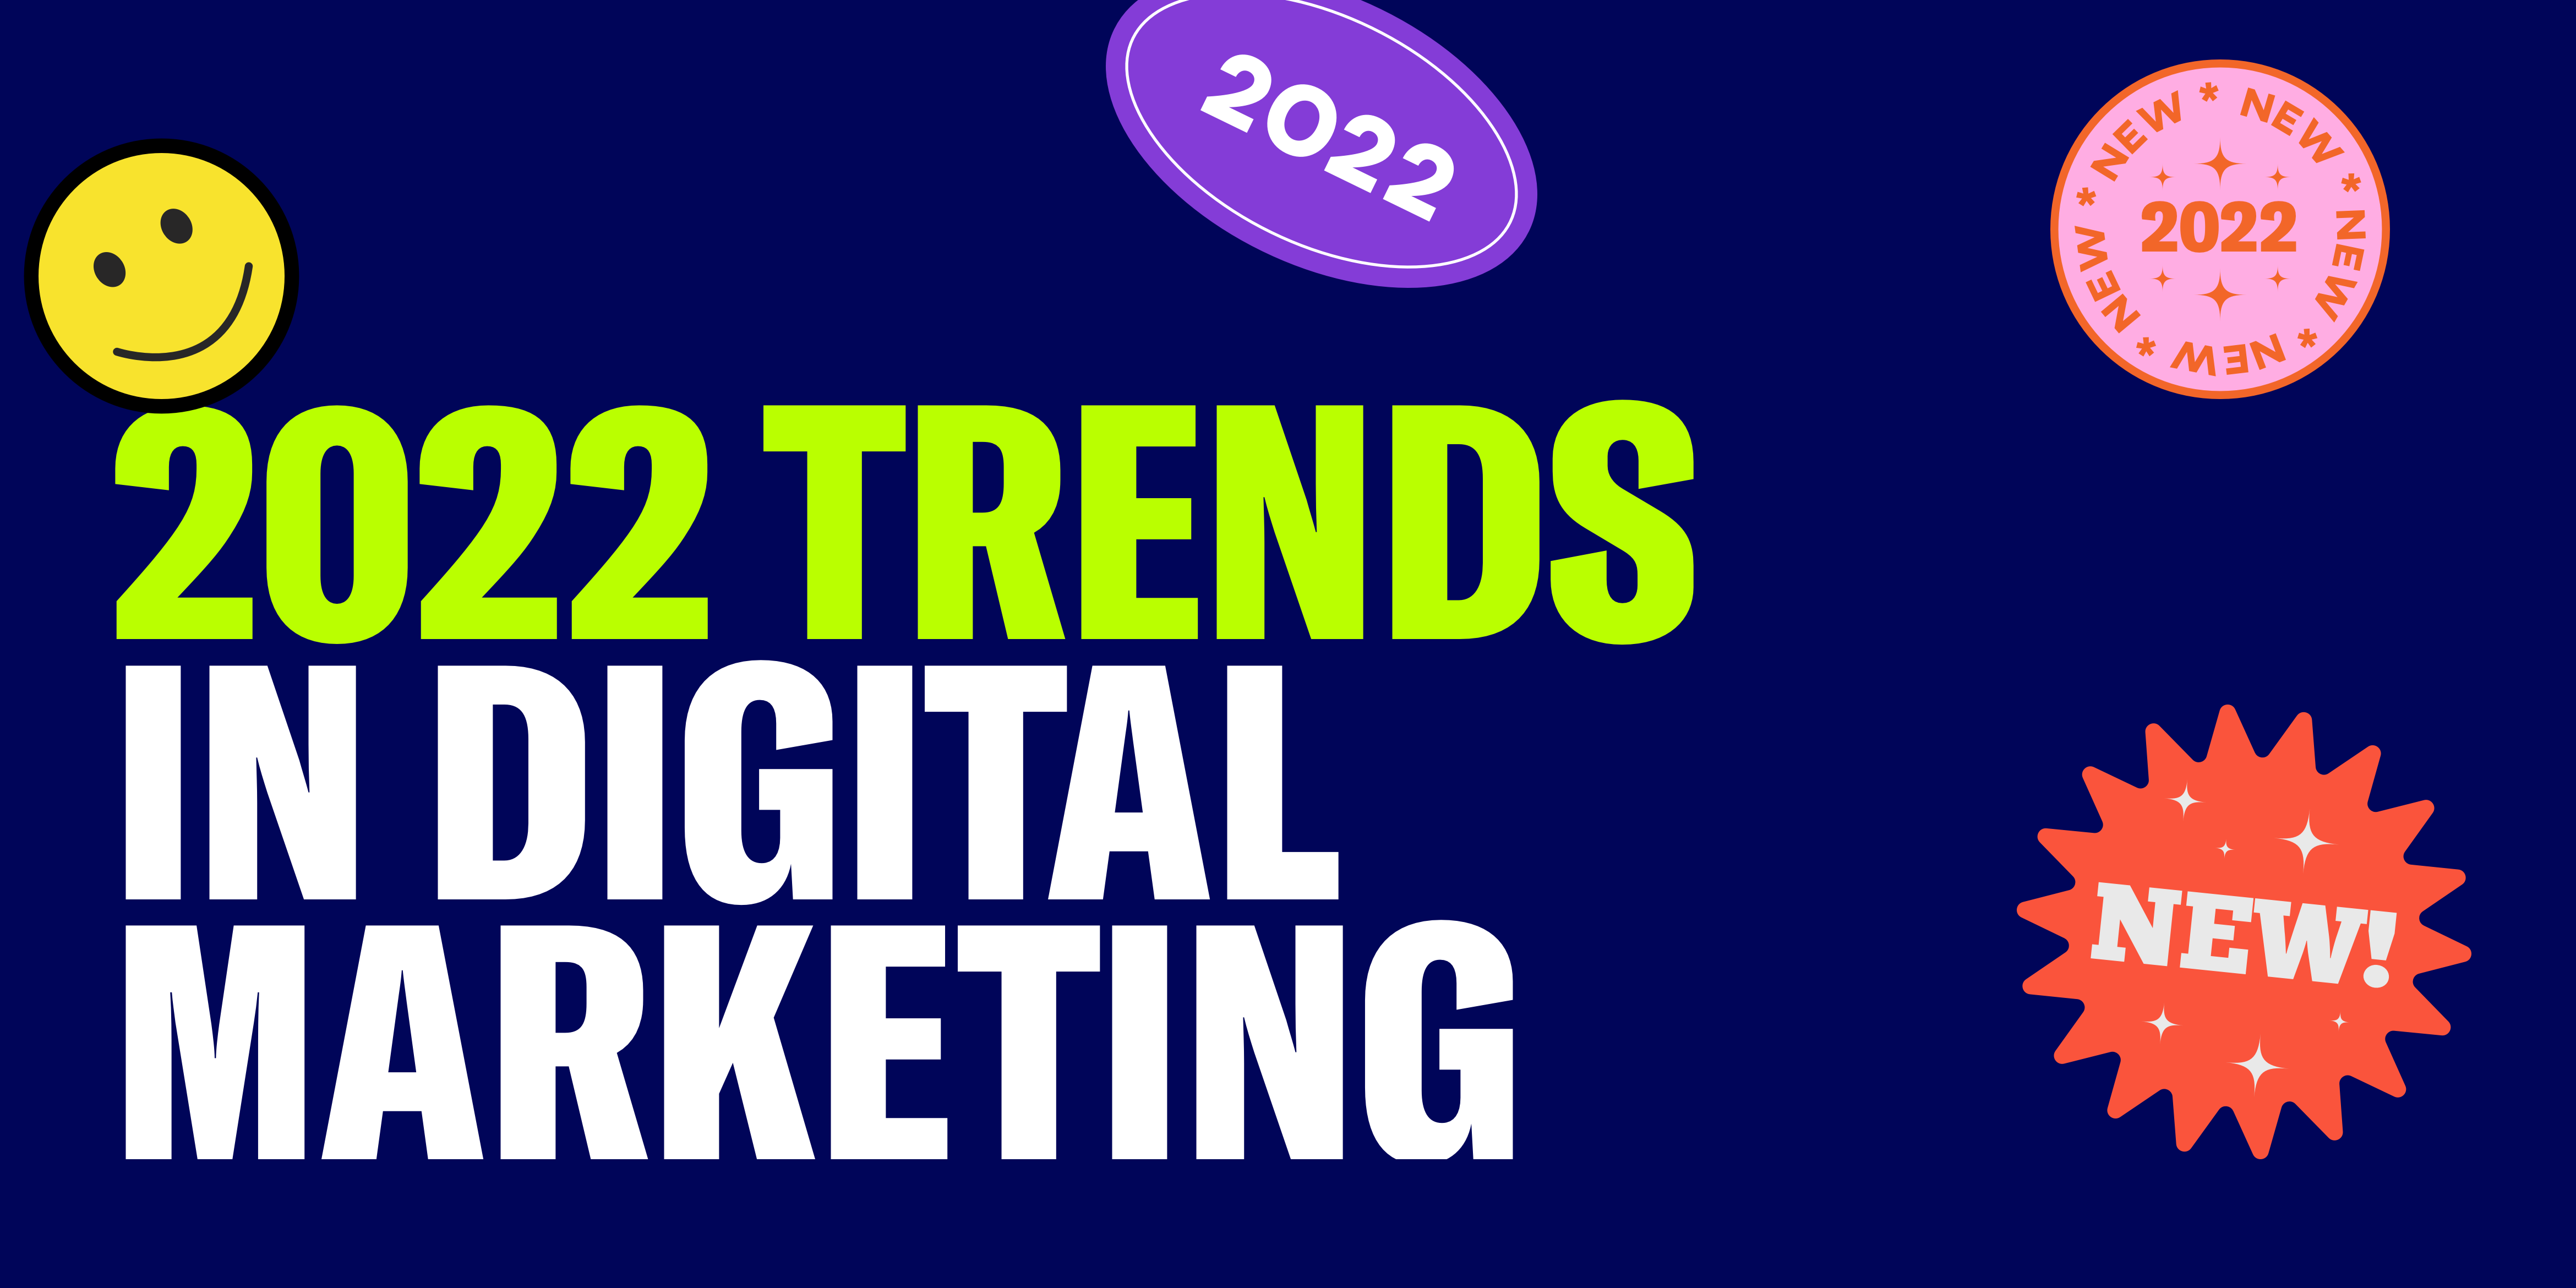 2022 Trends in Digital Marketing